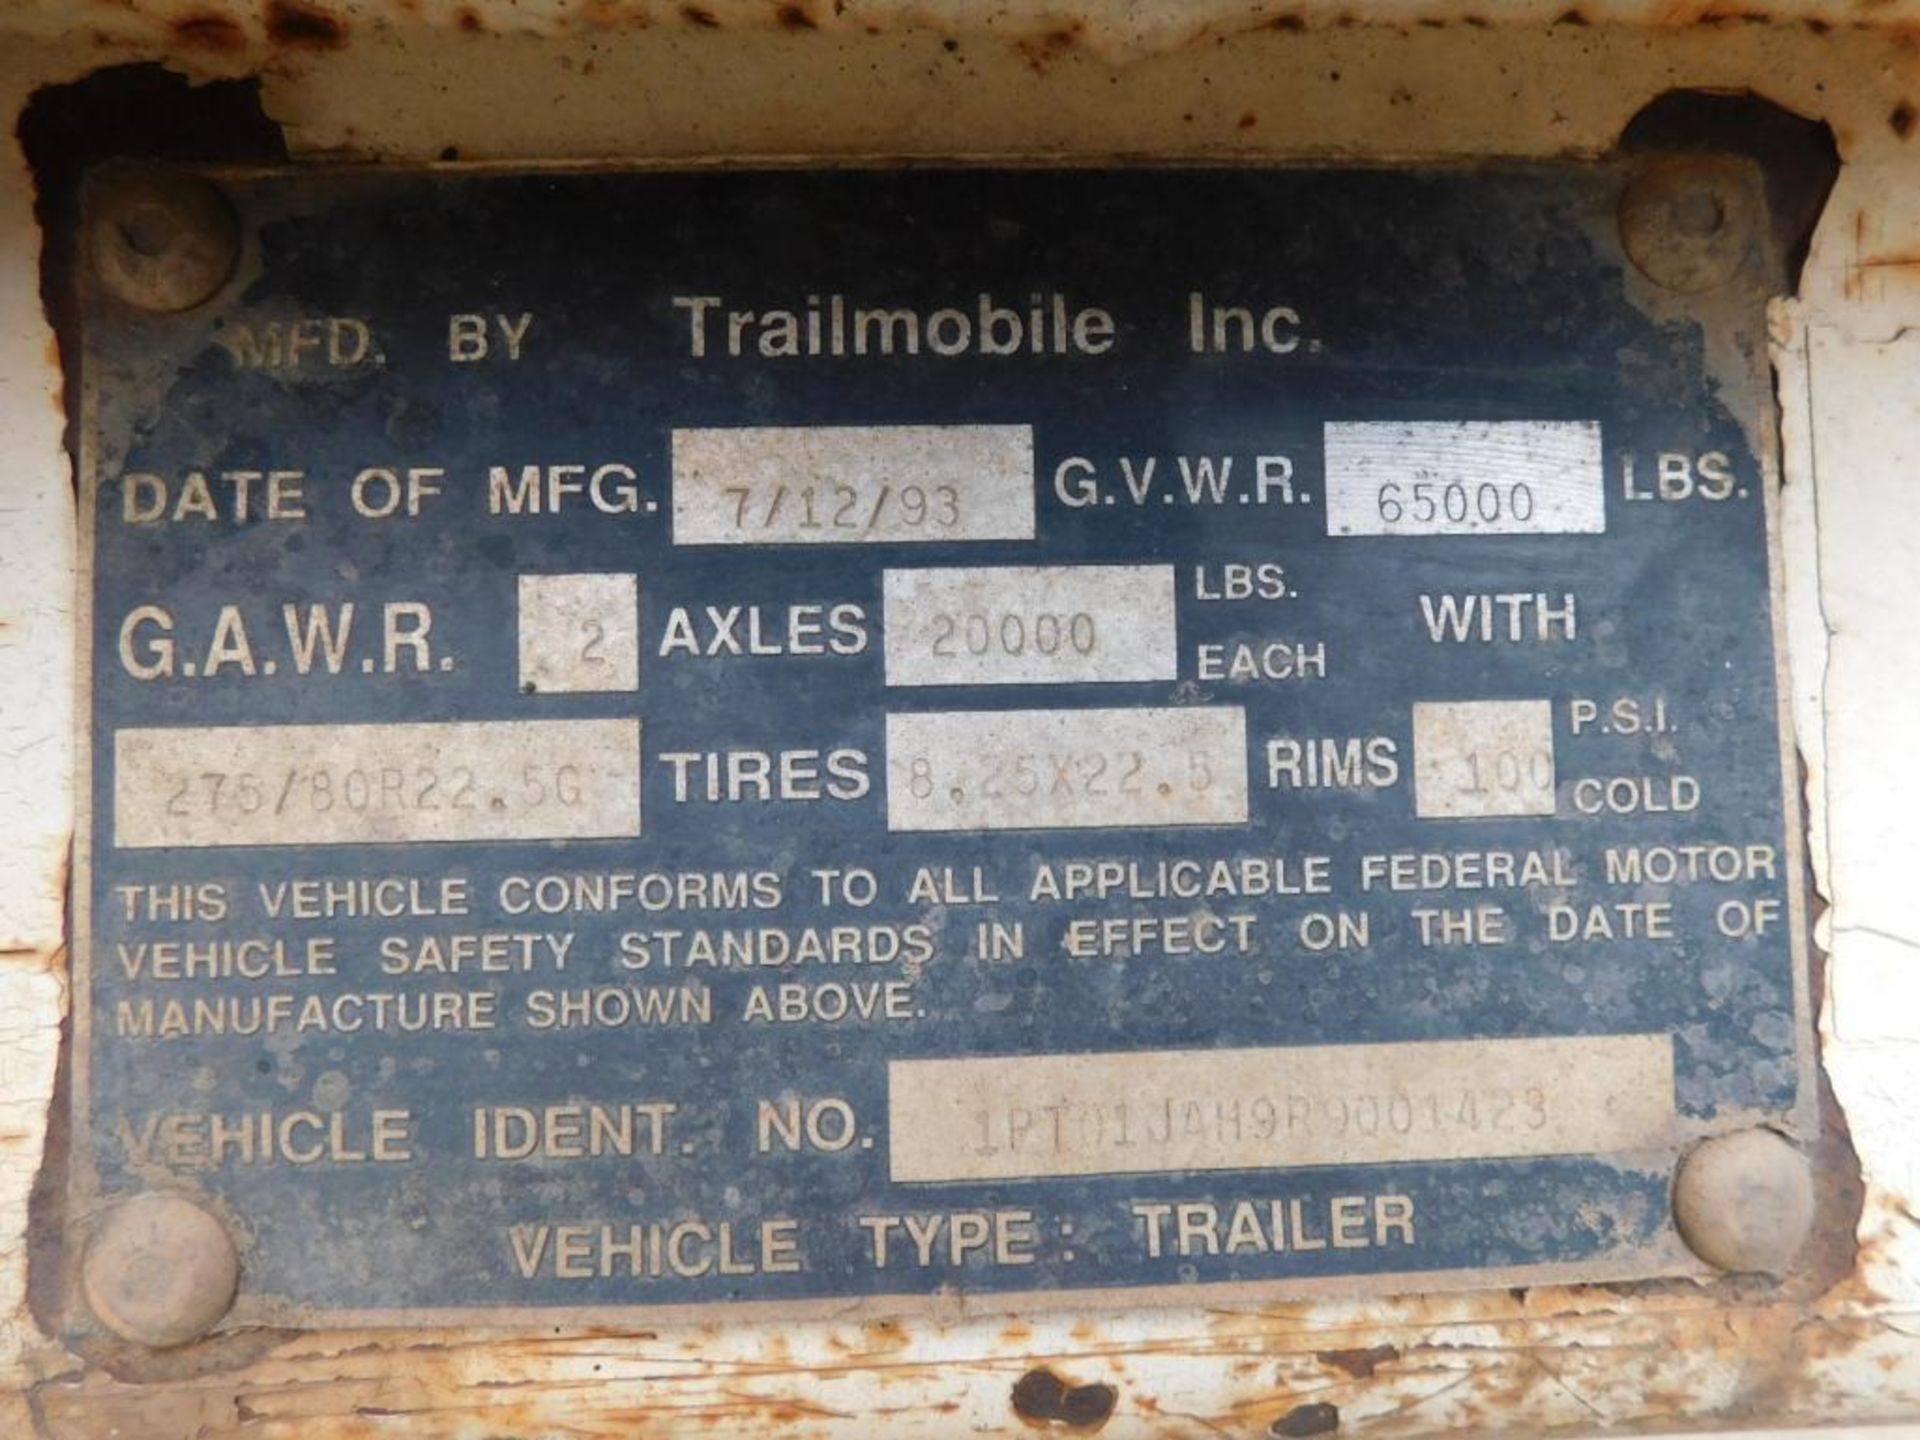 1994 Trailmobile 47.5' Trailer Dry Van, 65,000 GVWR, VIN 1PT01JAH9R9001423 - Image 9 of 9